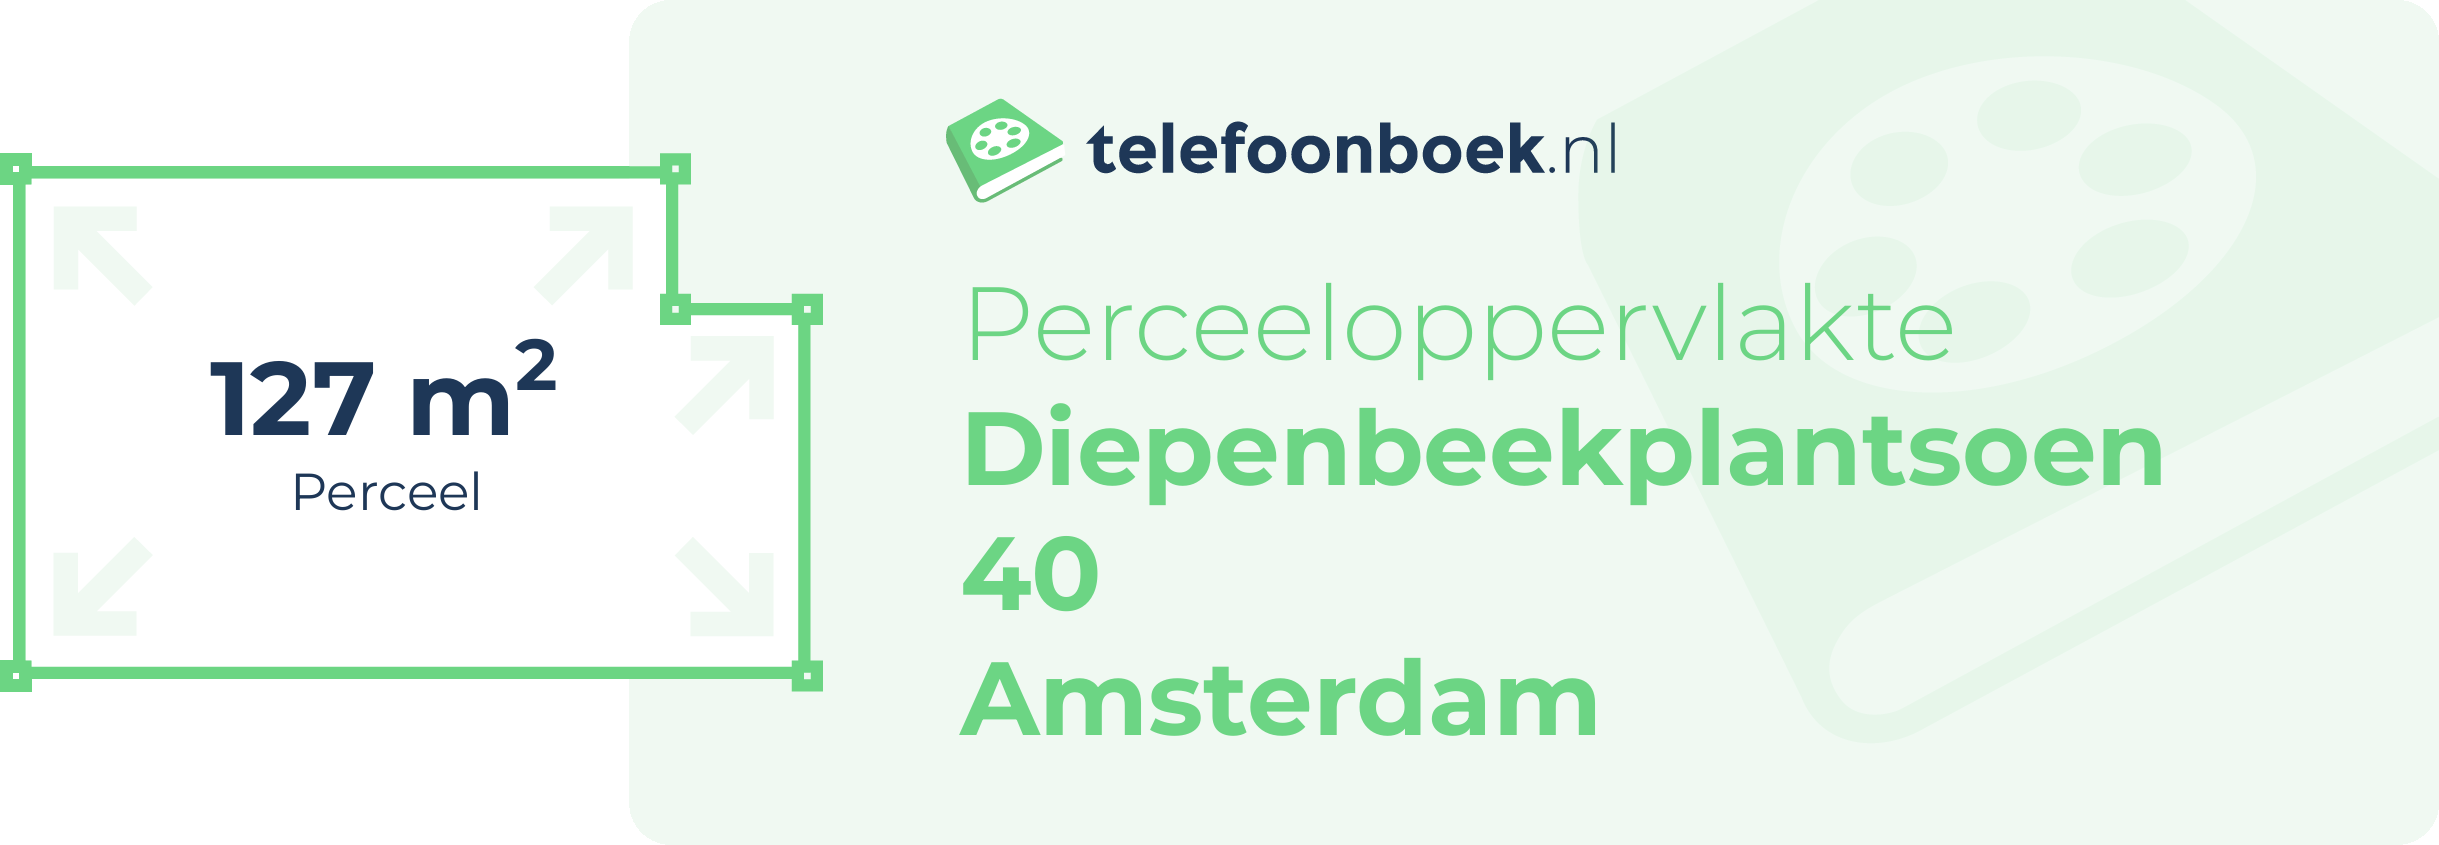 Perceeloppervlakte Diepenbeekplantsoen 40 Amsterdam